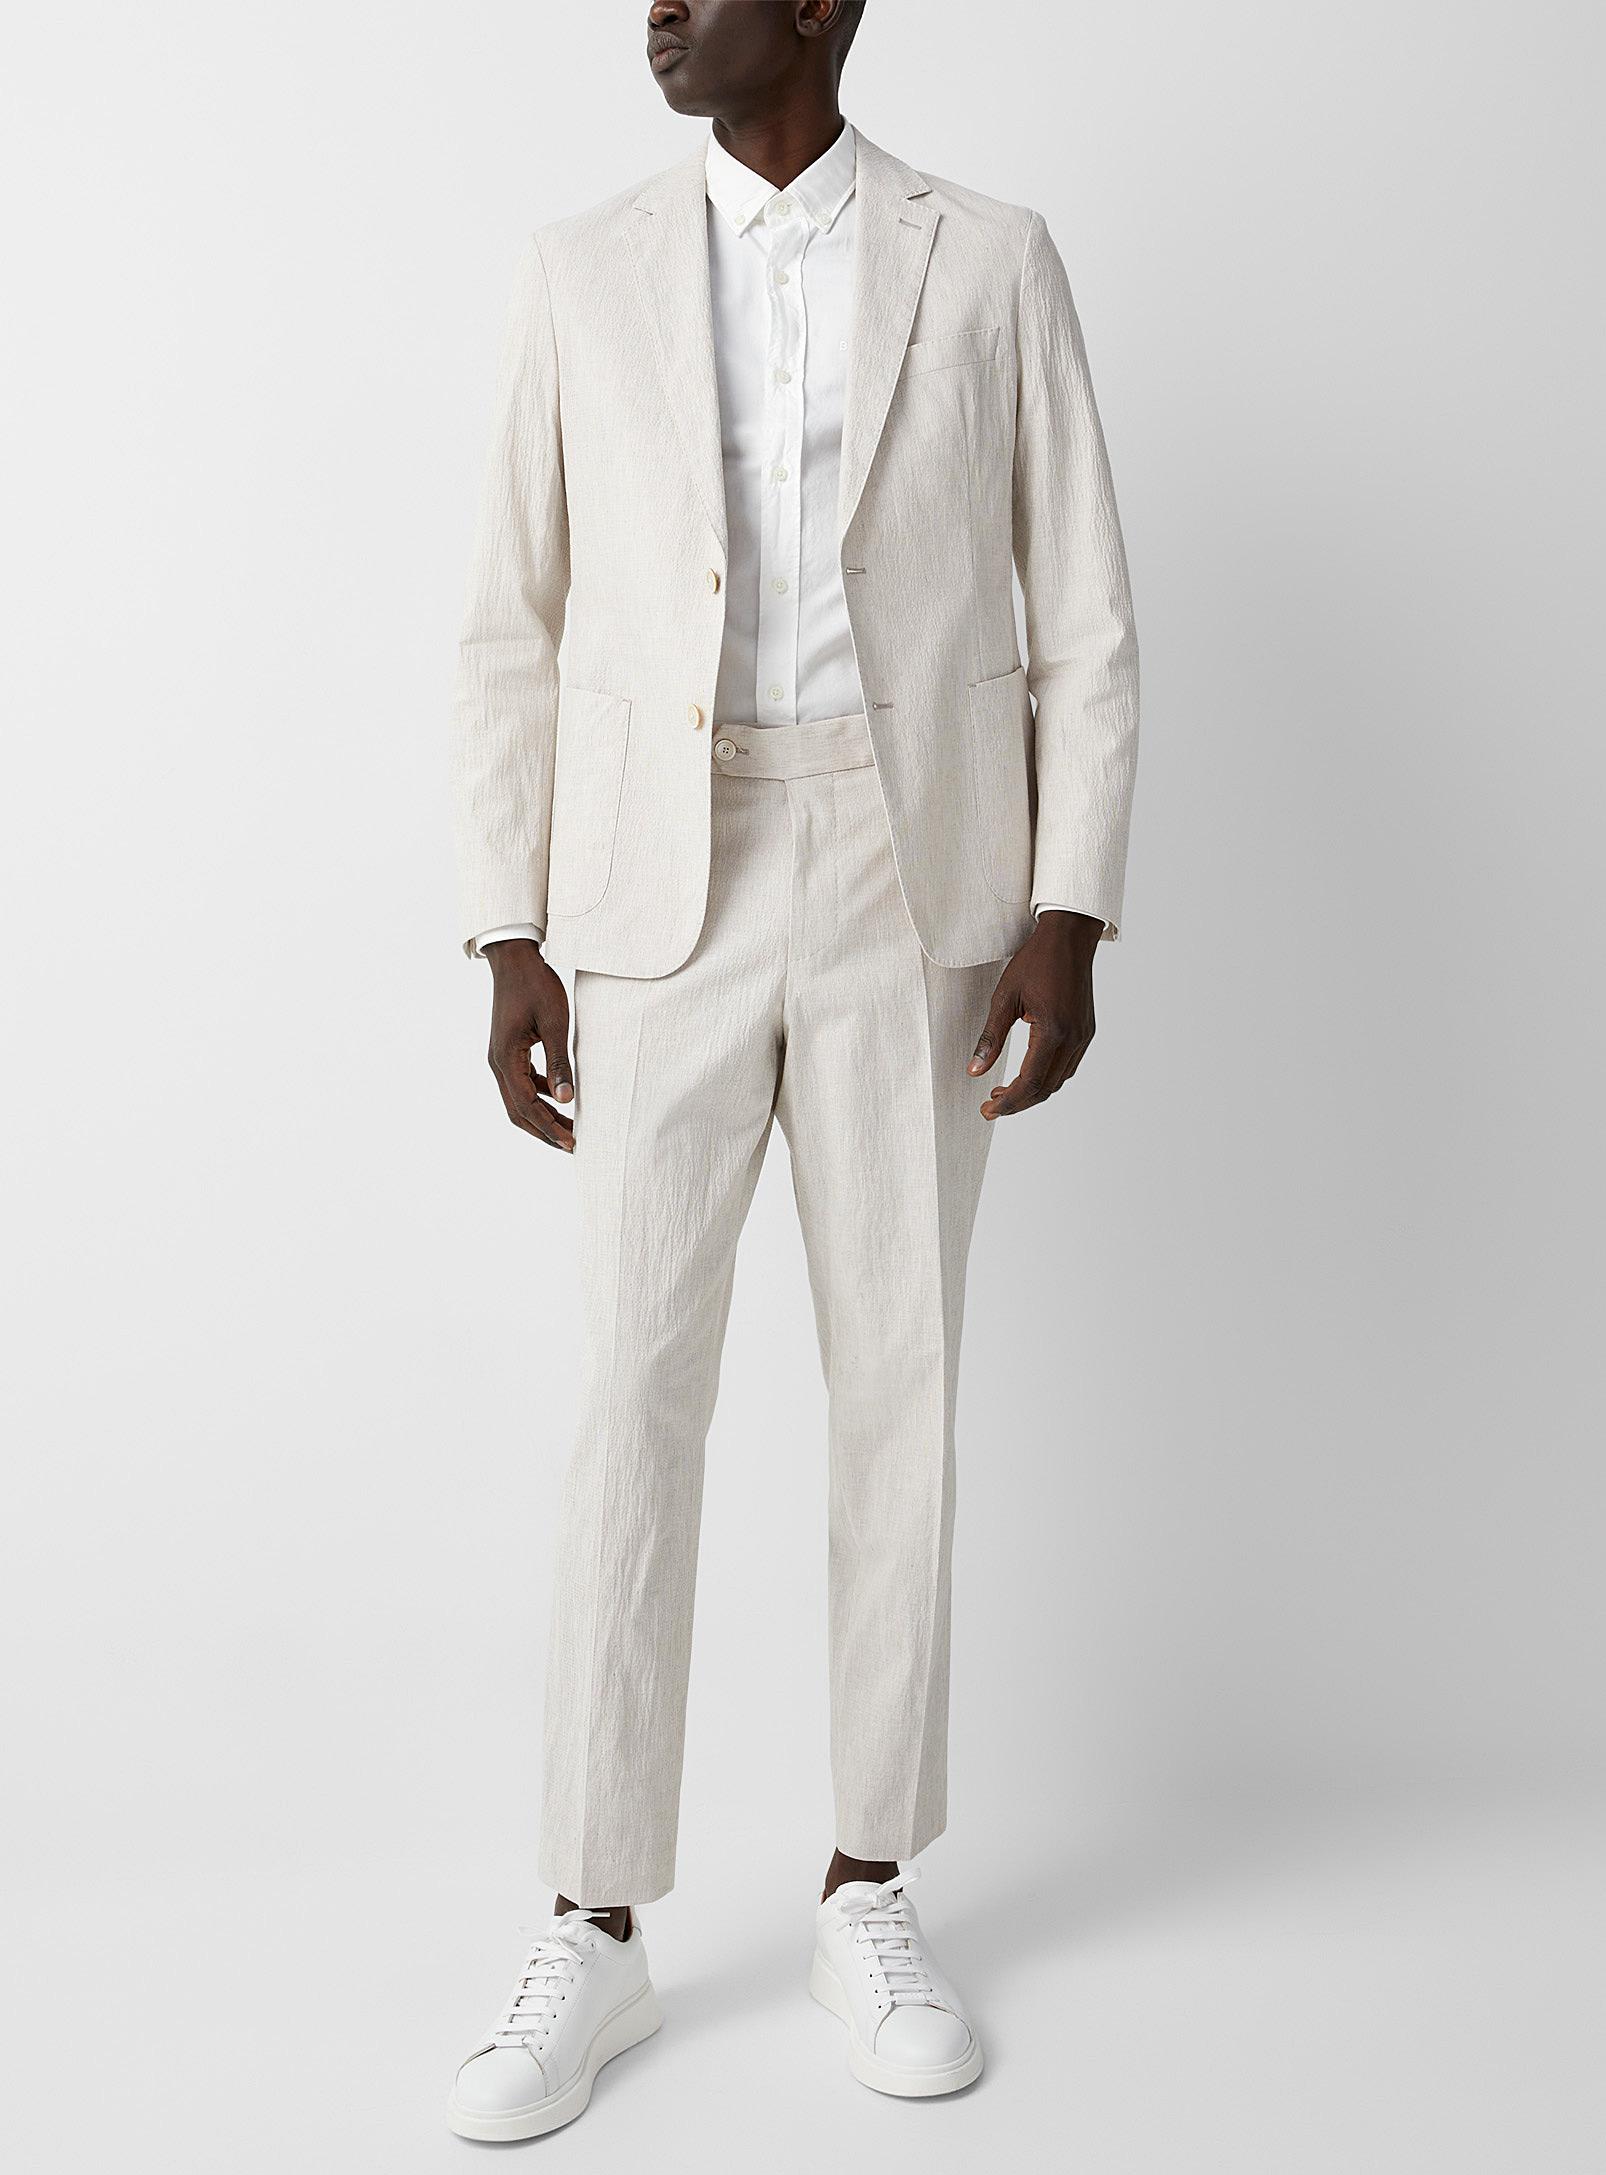 BOSS by HUGO BOSS Seersucker Suit in White for Men | Lyst